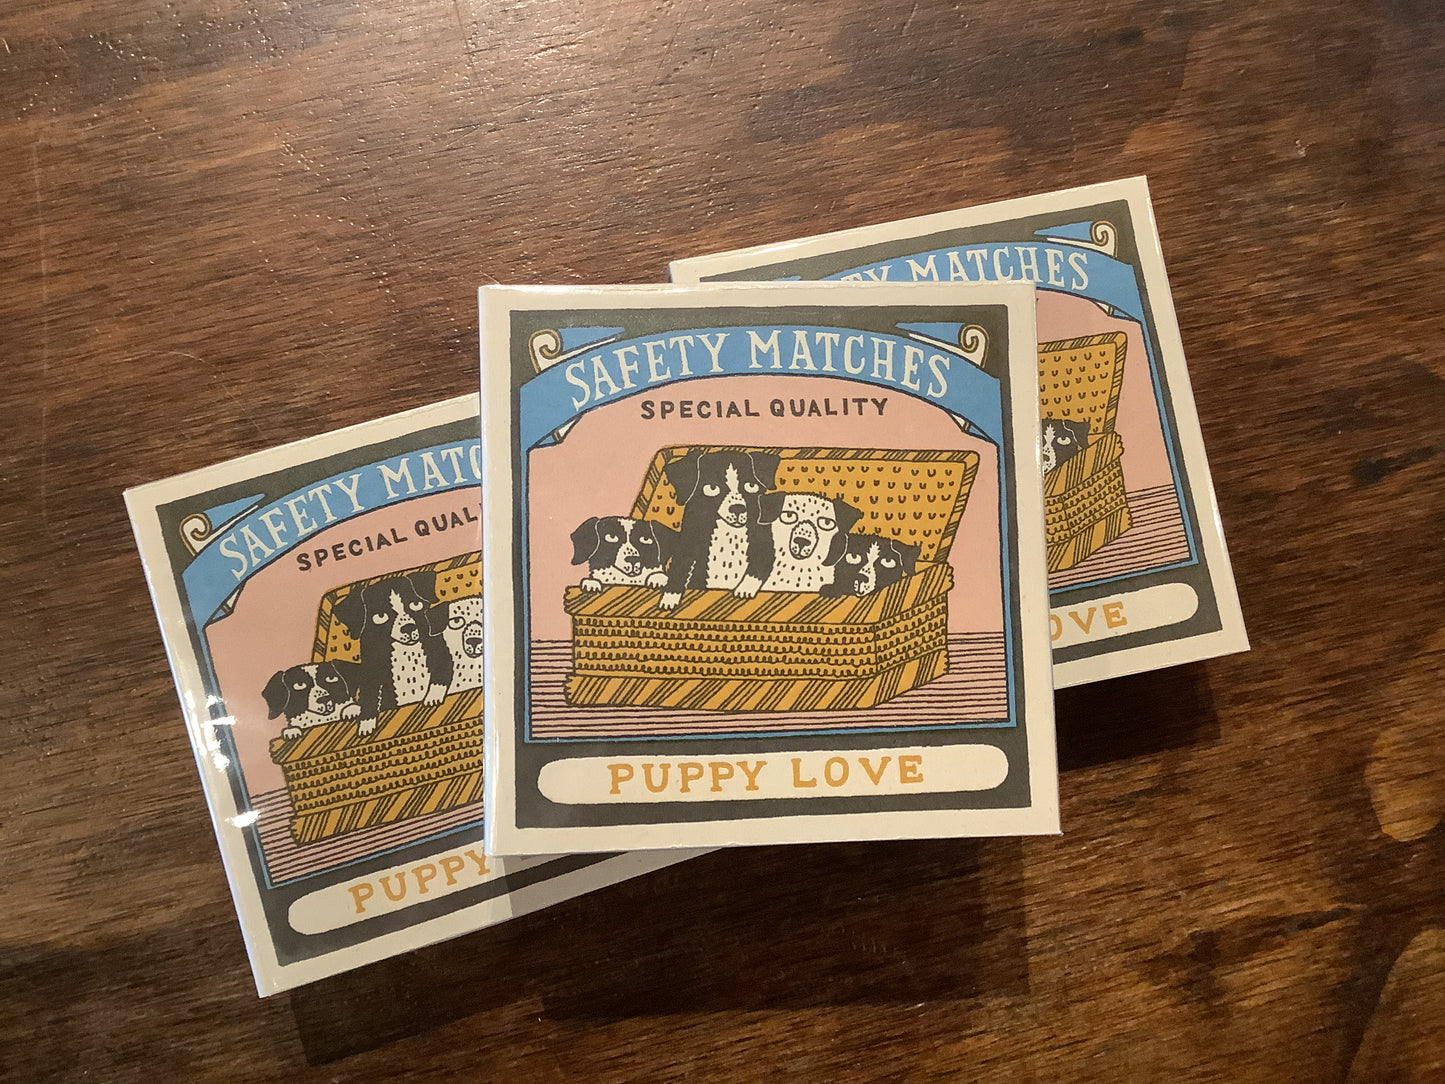 Archivist Gallery Matchbooks